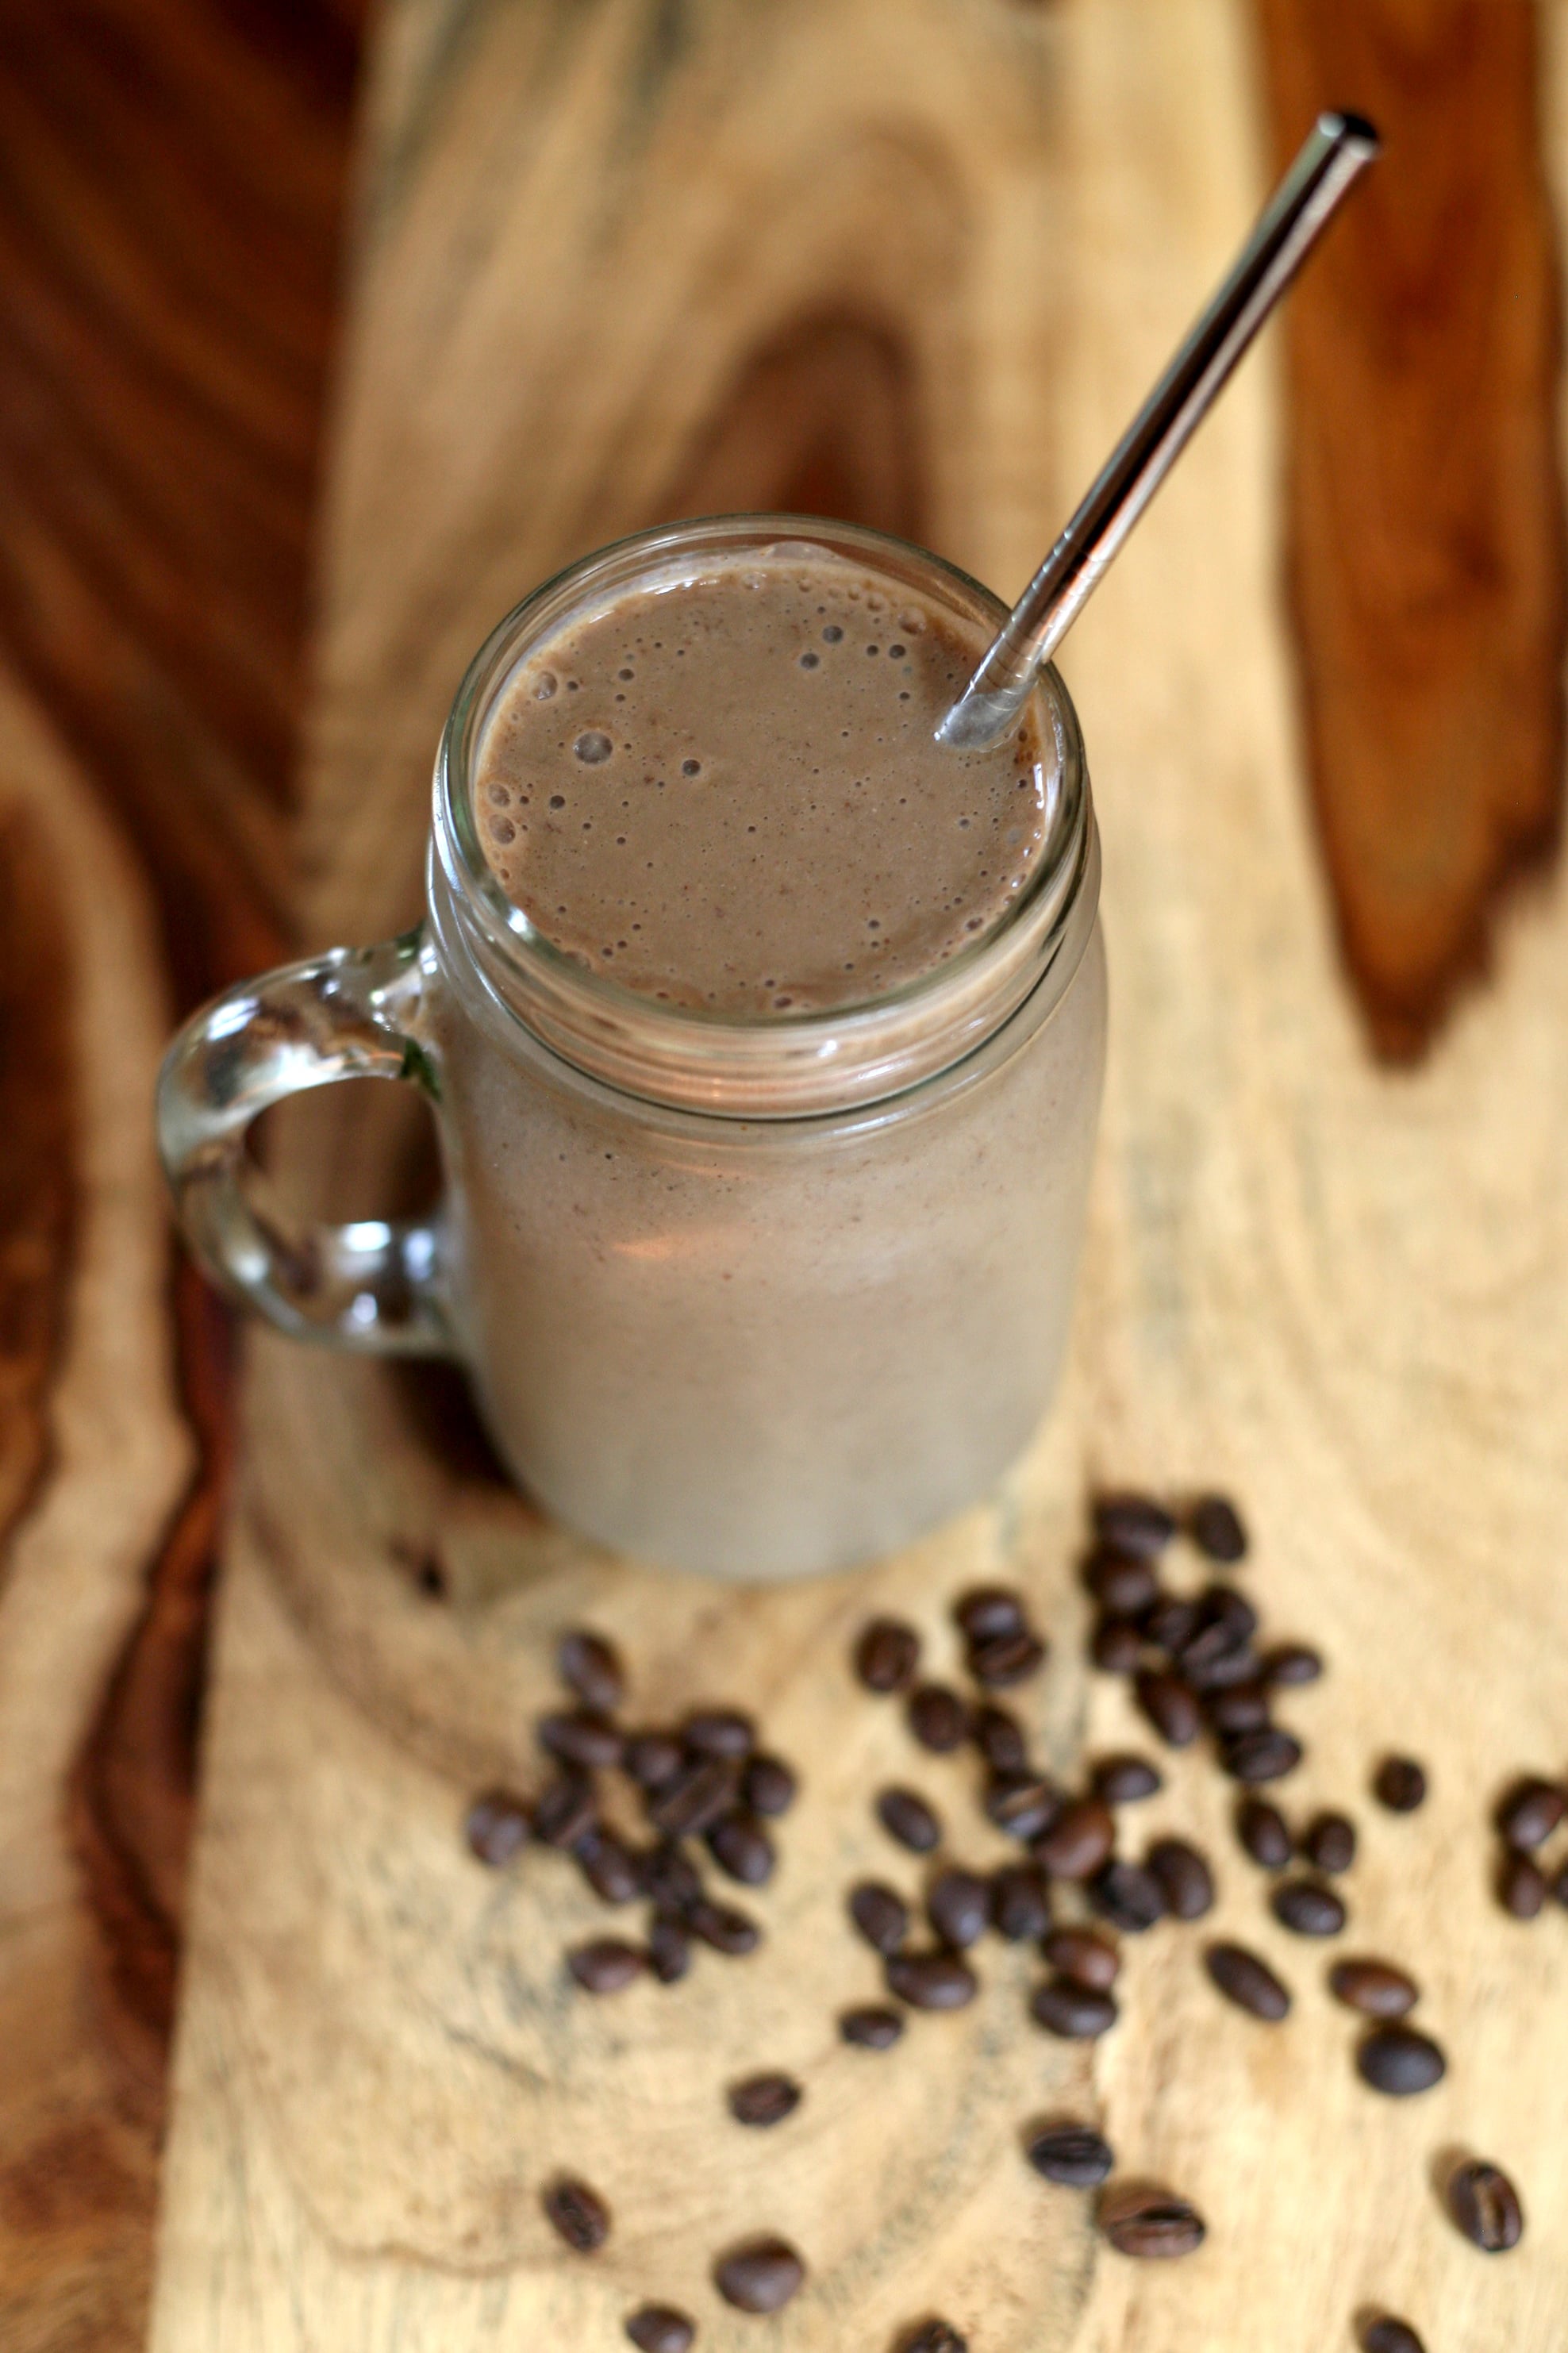 Iced Coffee To Go  Coffee protein smoothie, Protein smoothie